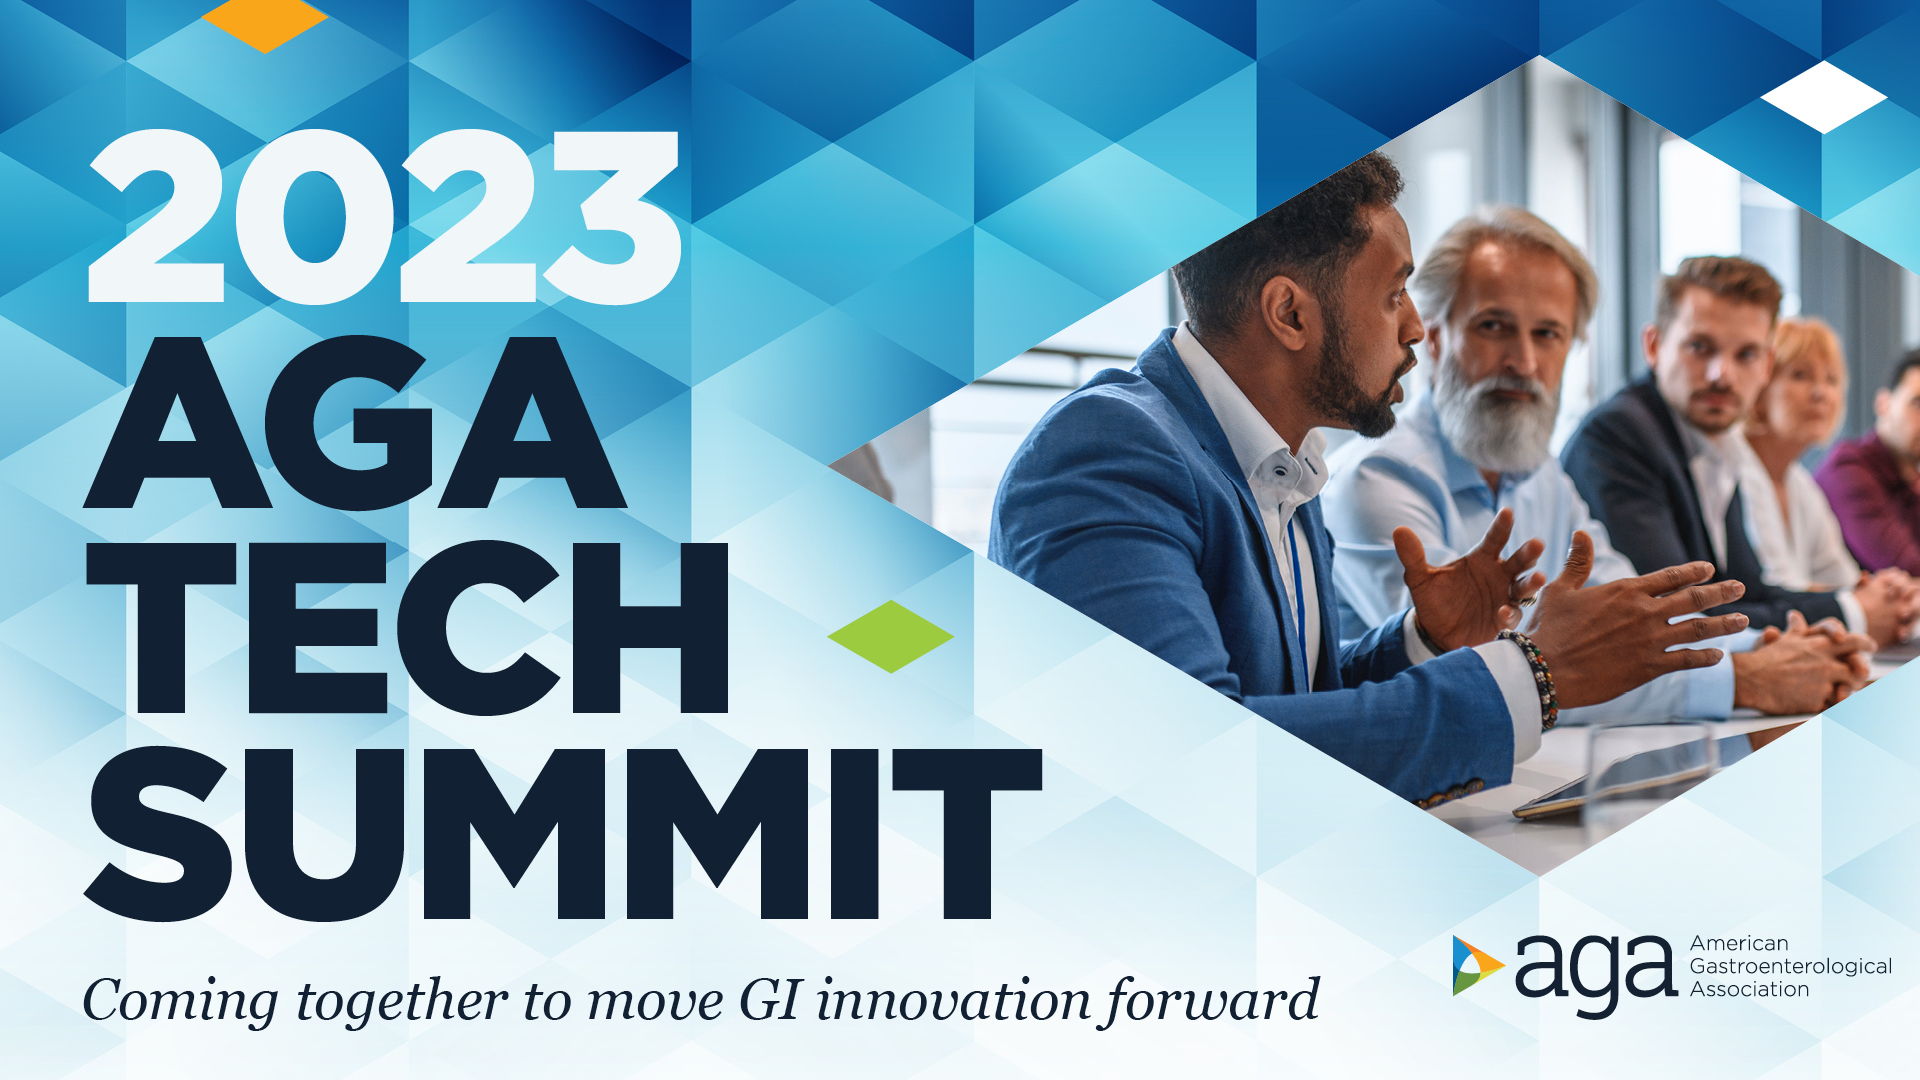 Help move innovation forward at the 2023 AGA Tech Summit American